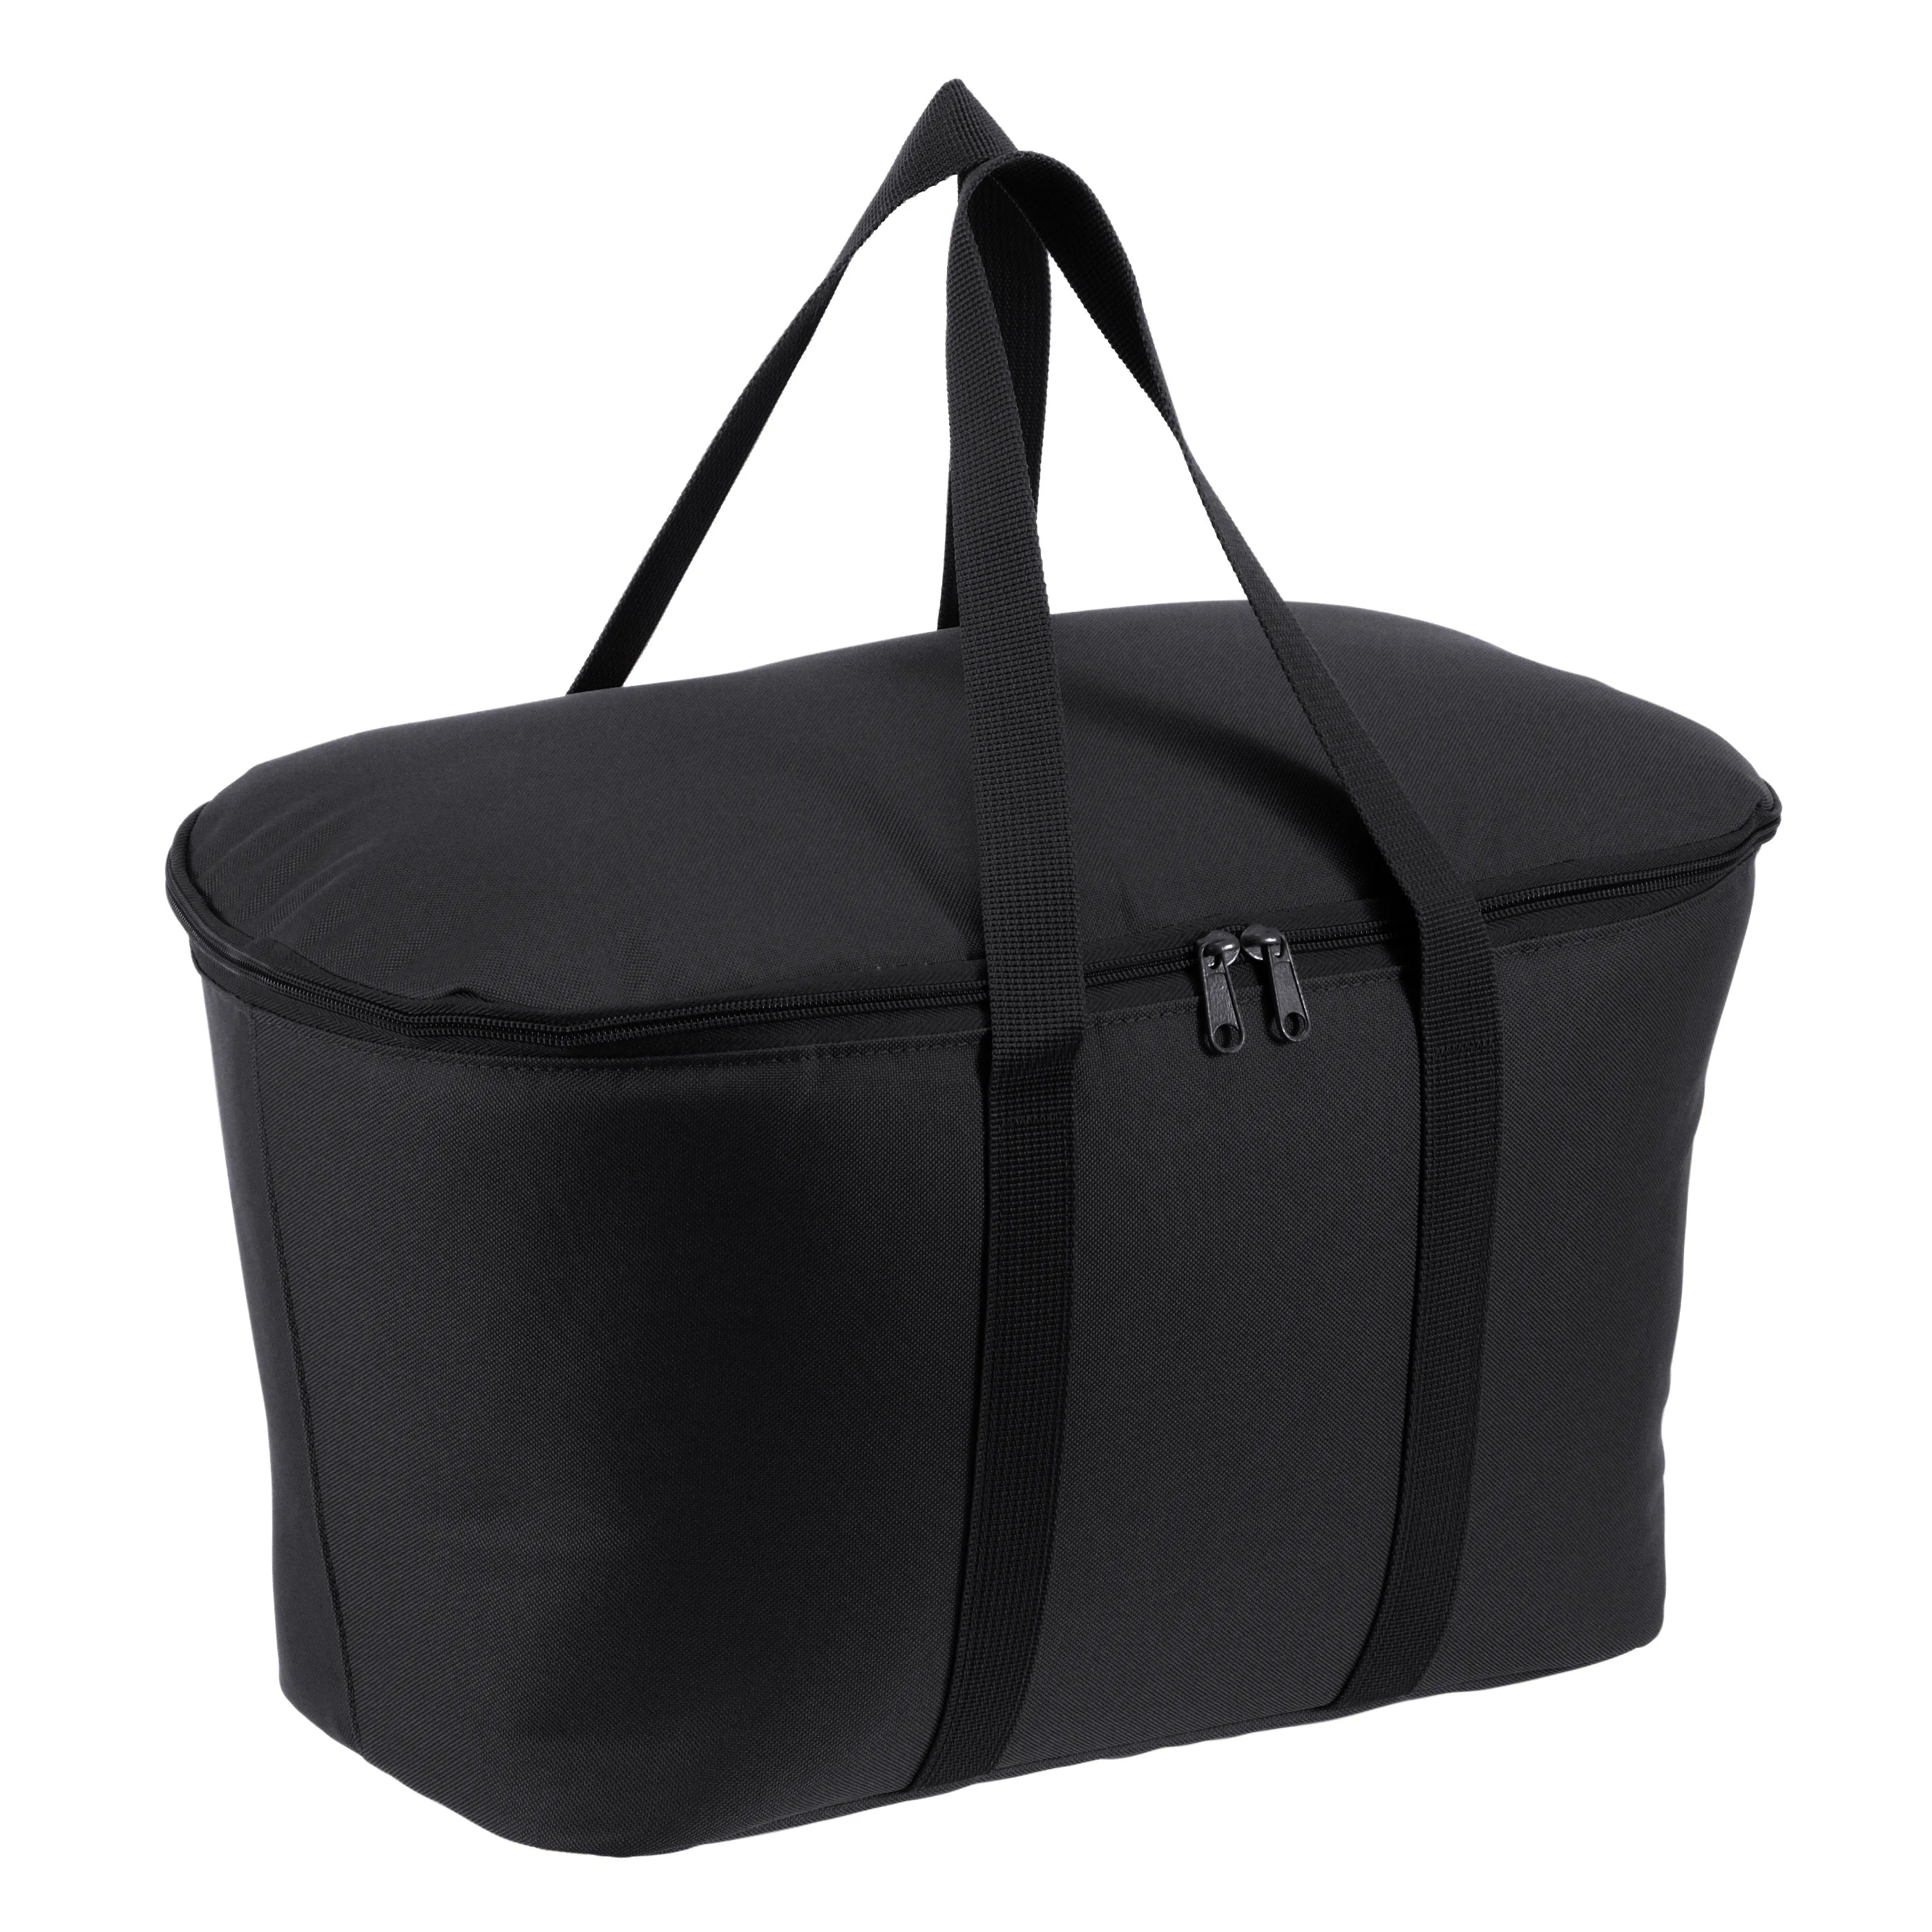 Reisenthel Shopping Coolerbag sac isotherme 44 cm - noir